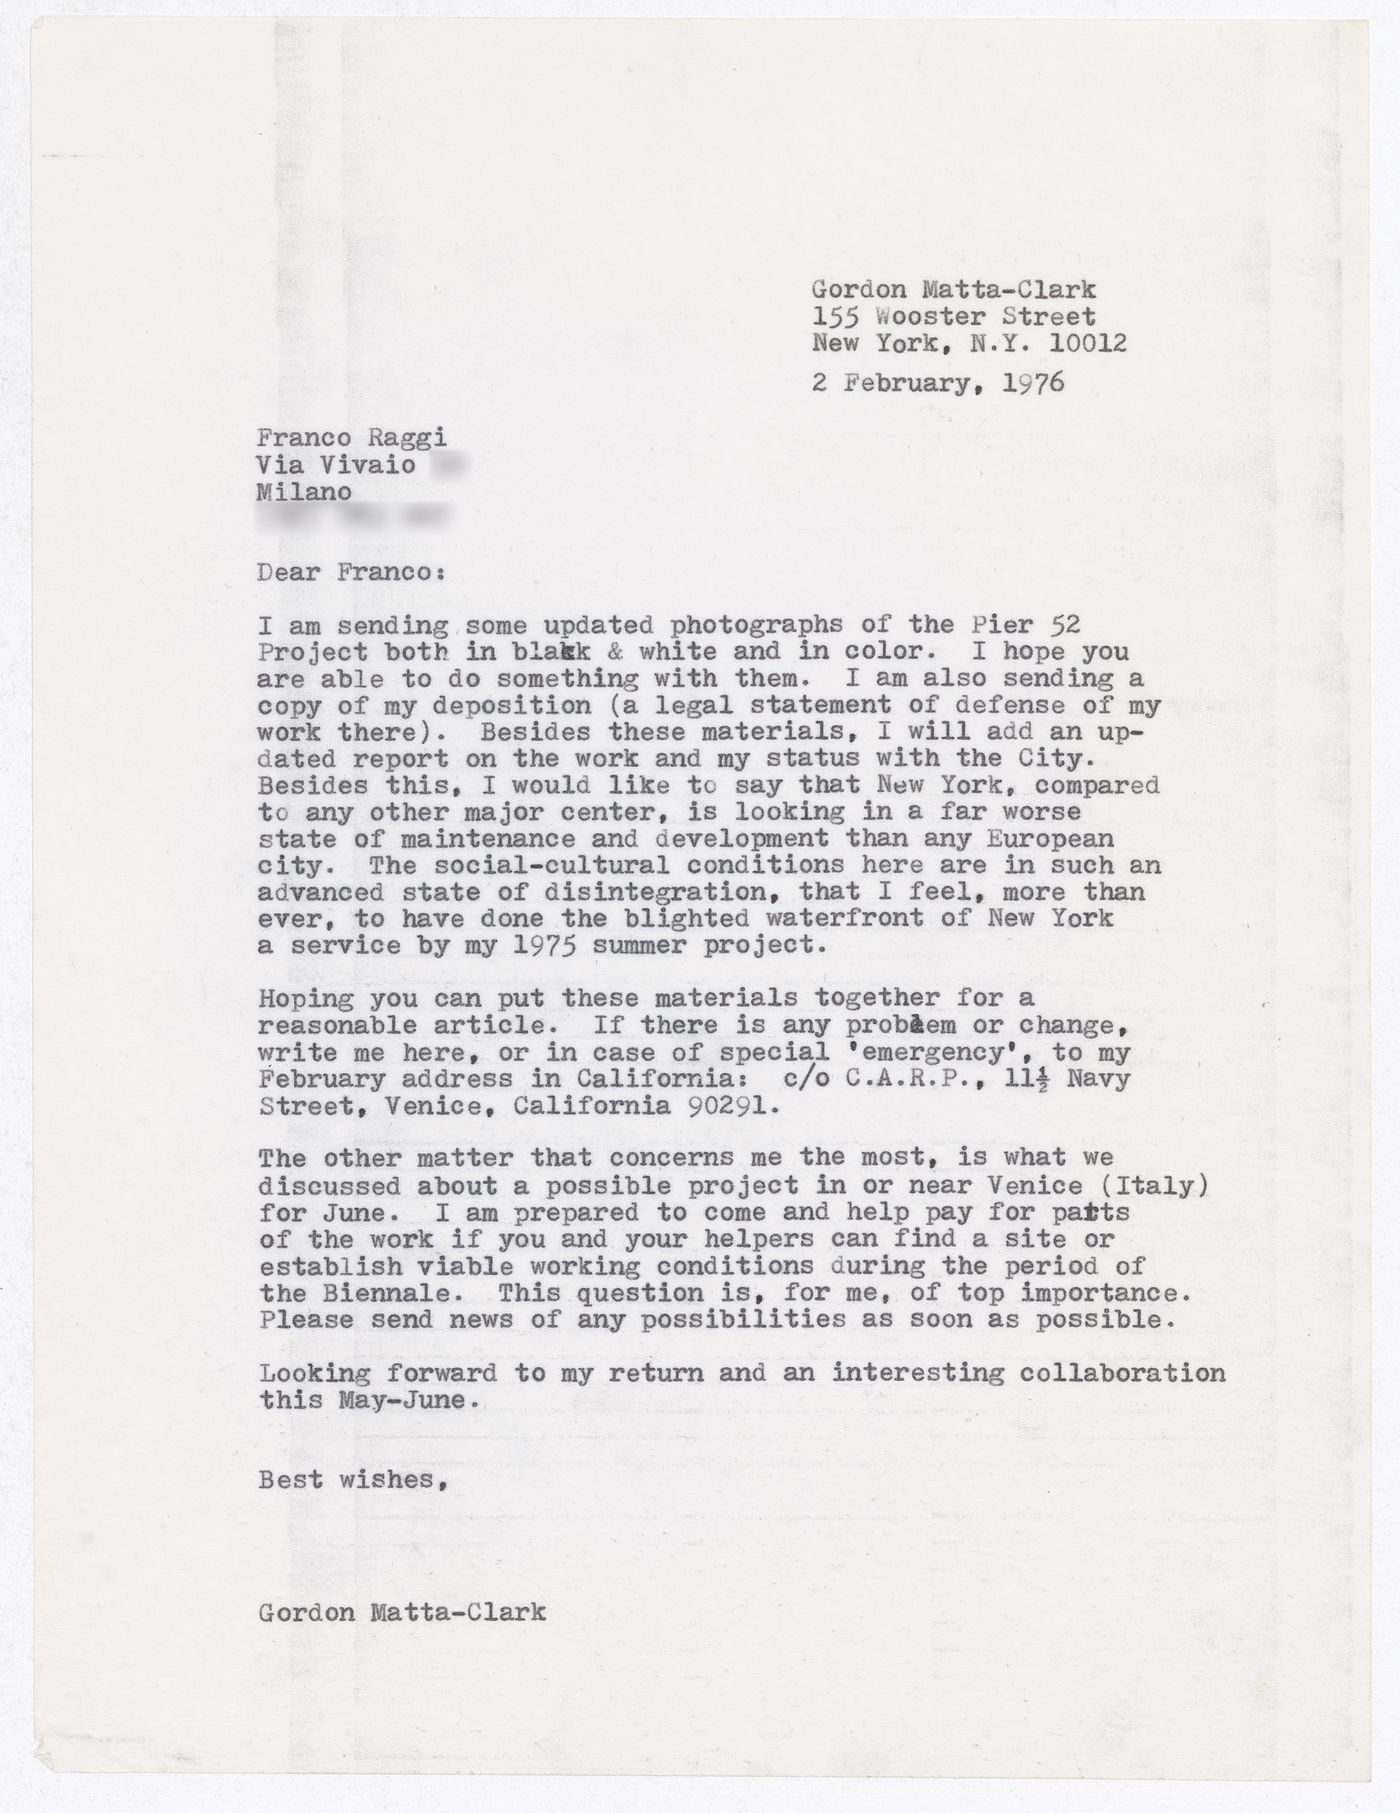 Letter from Gordon Matta-Clark to Franco Raggi